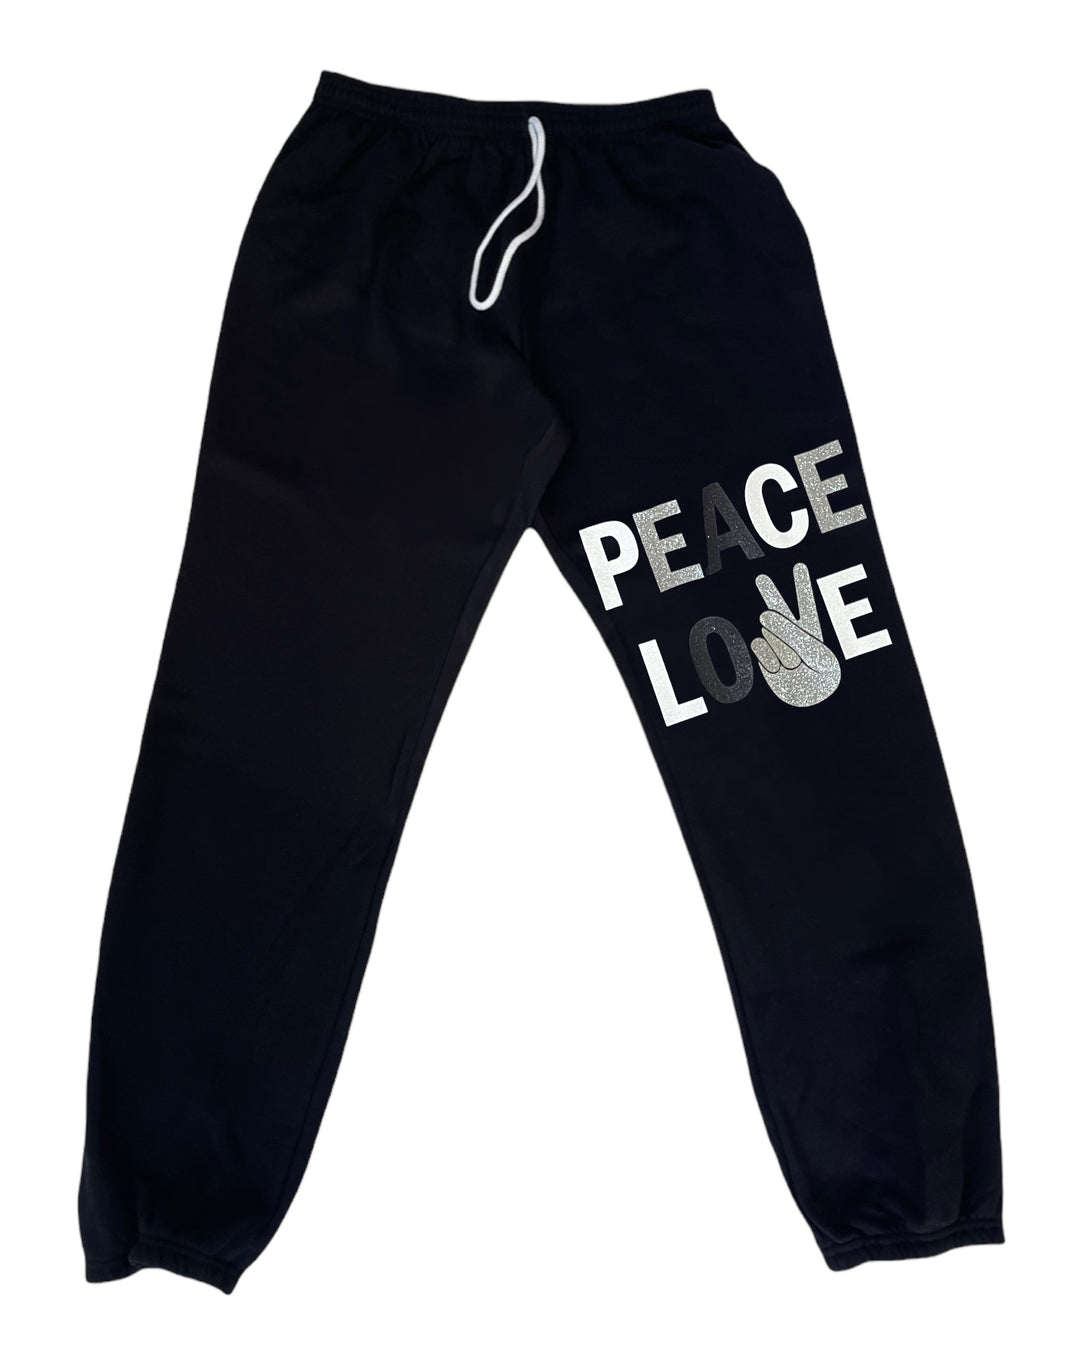 Peace Love Sweatpants- Black/White/Silver Glitter